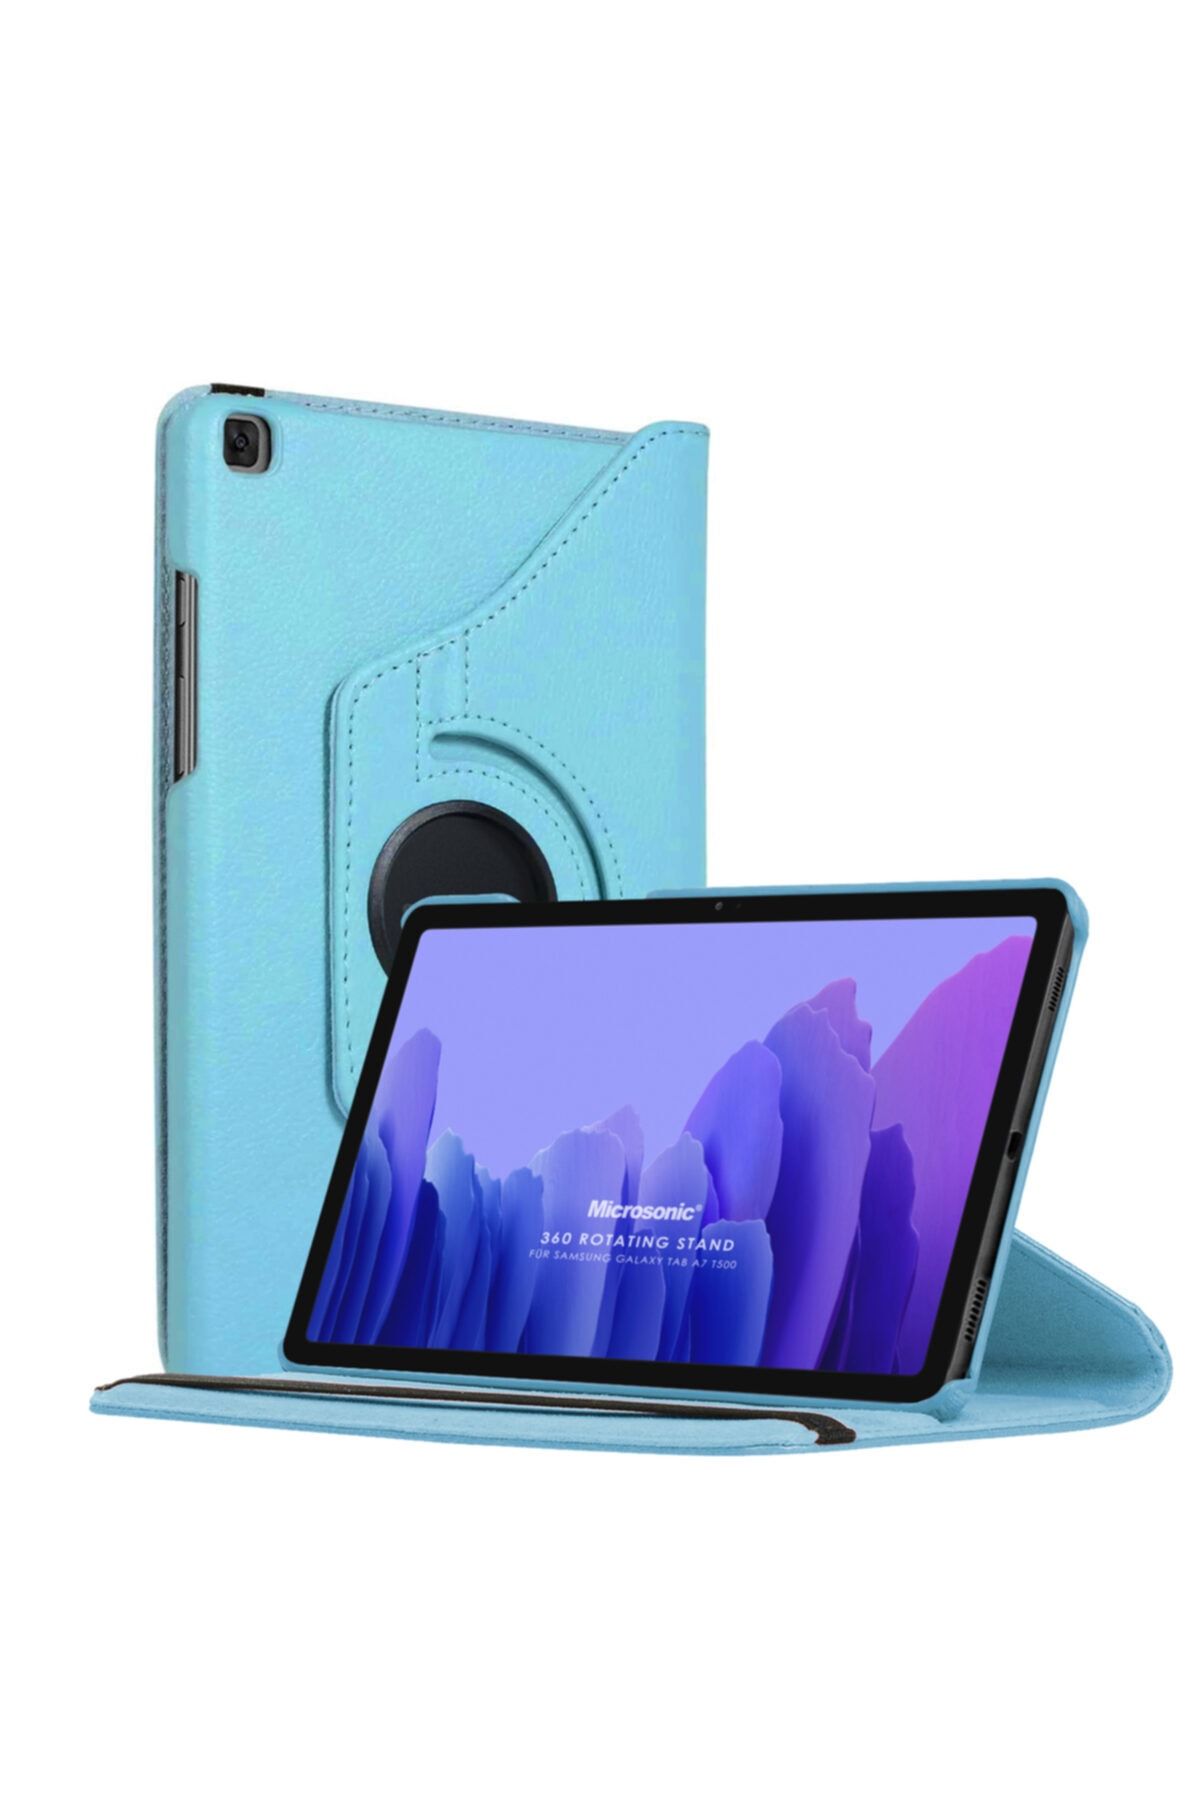 Microsonic Galaxy Tab A7 T500 Kılıf 360 Rotating Stand Deri Mavi